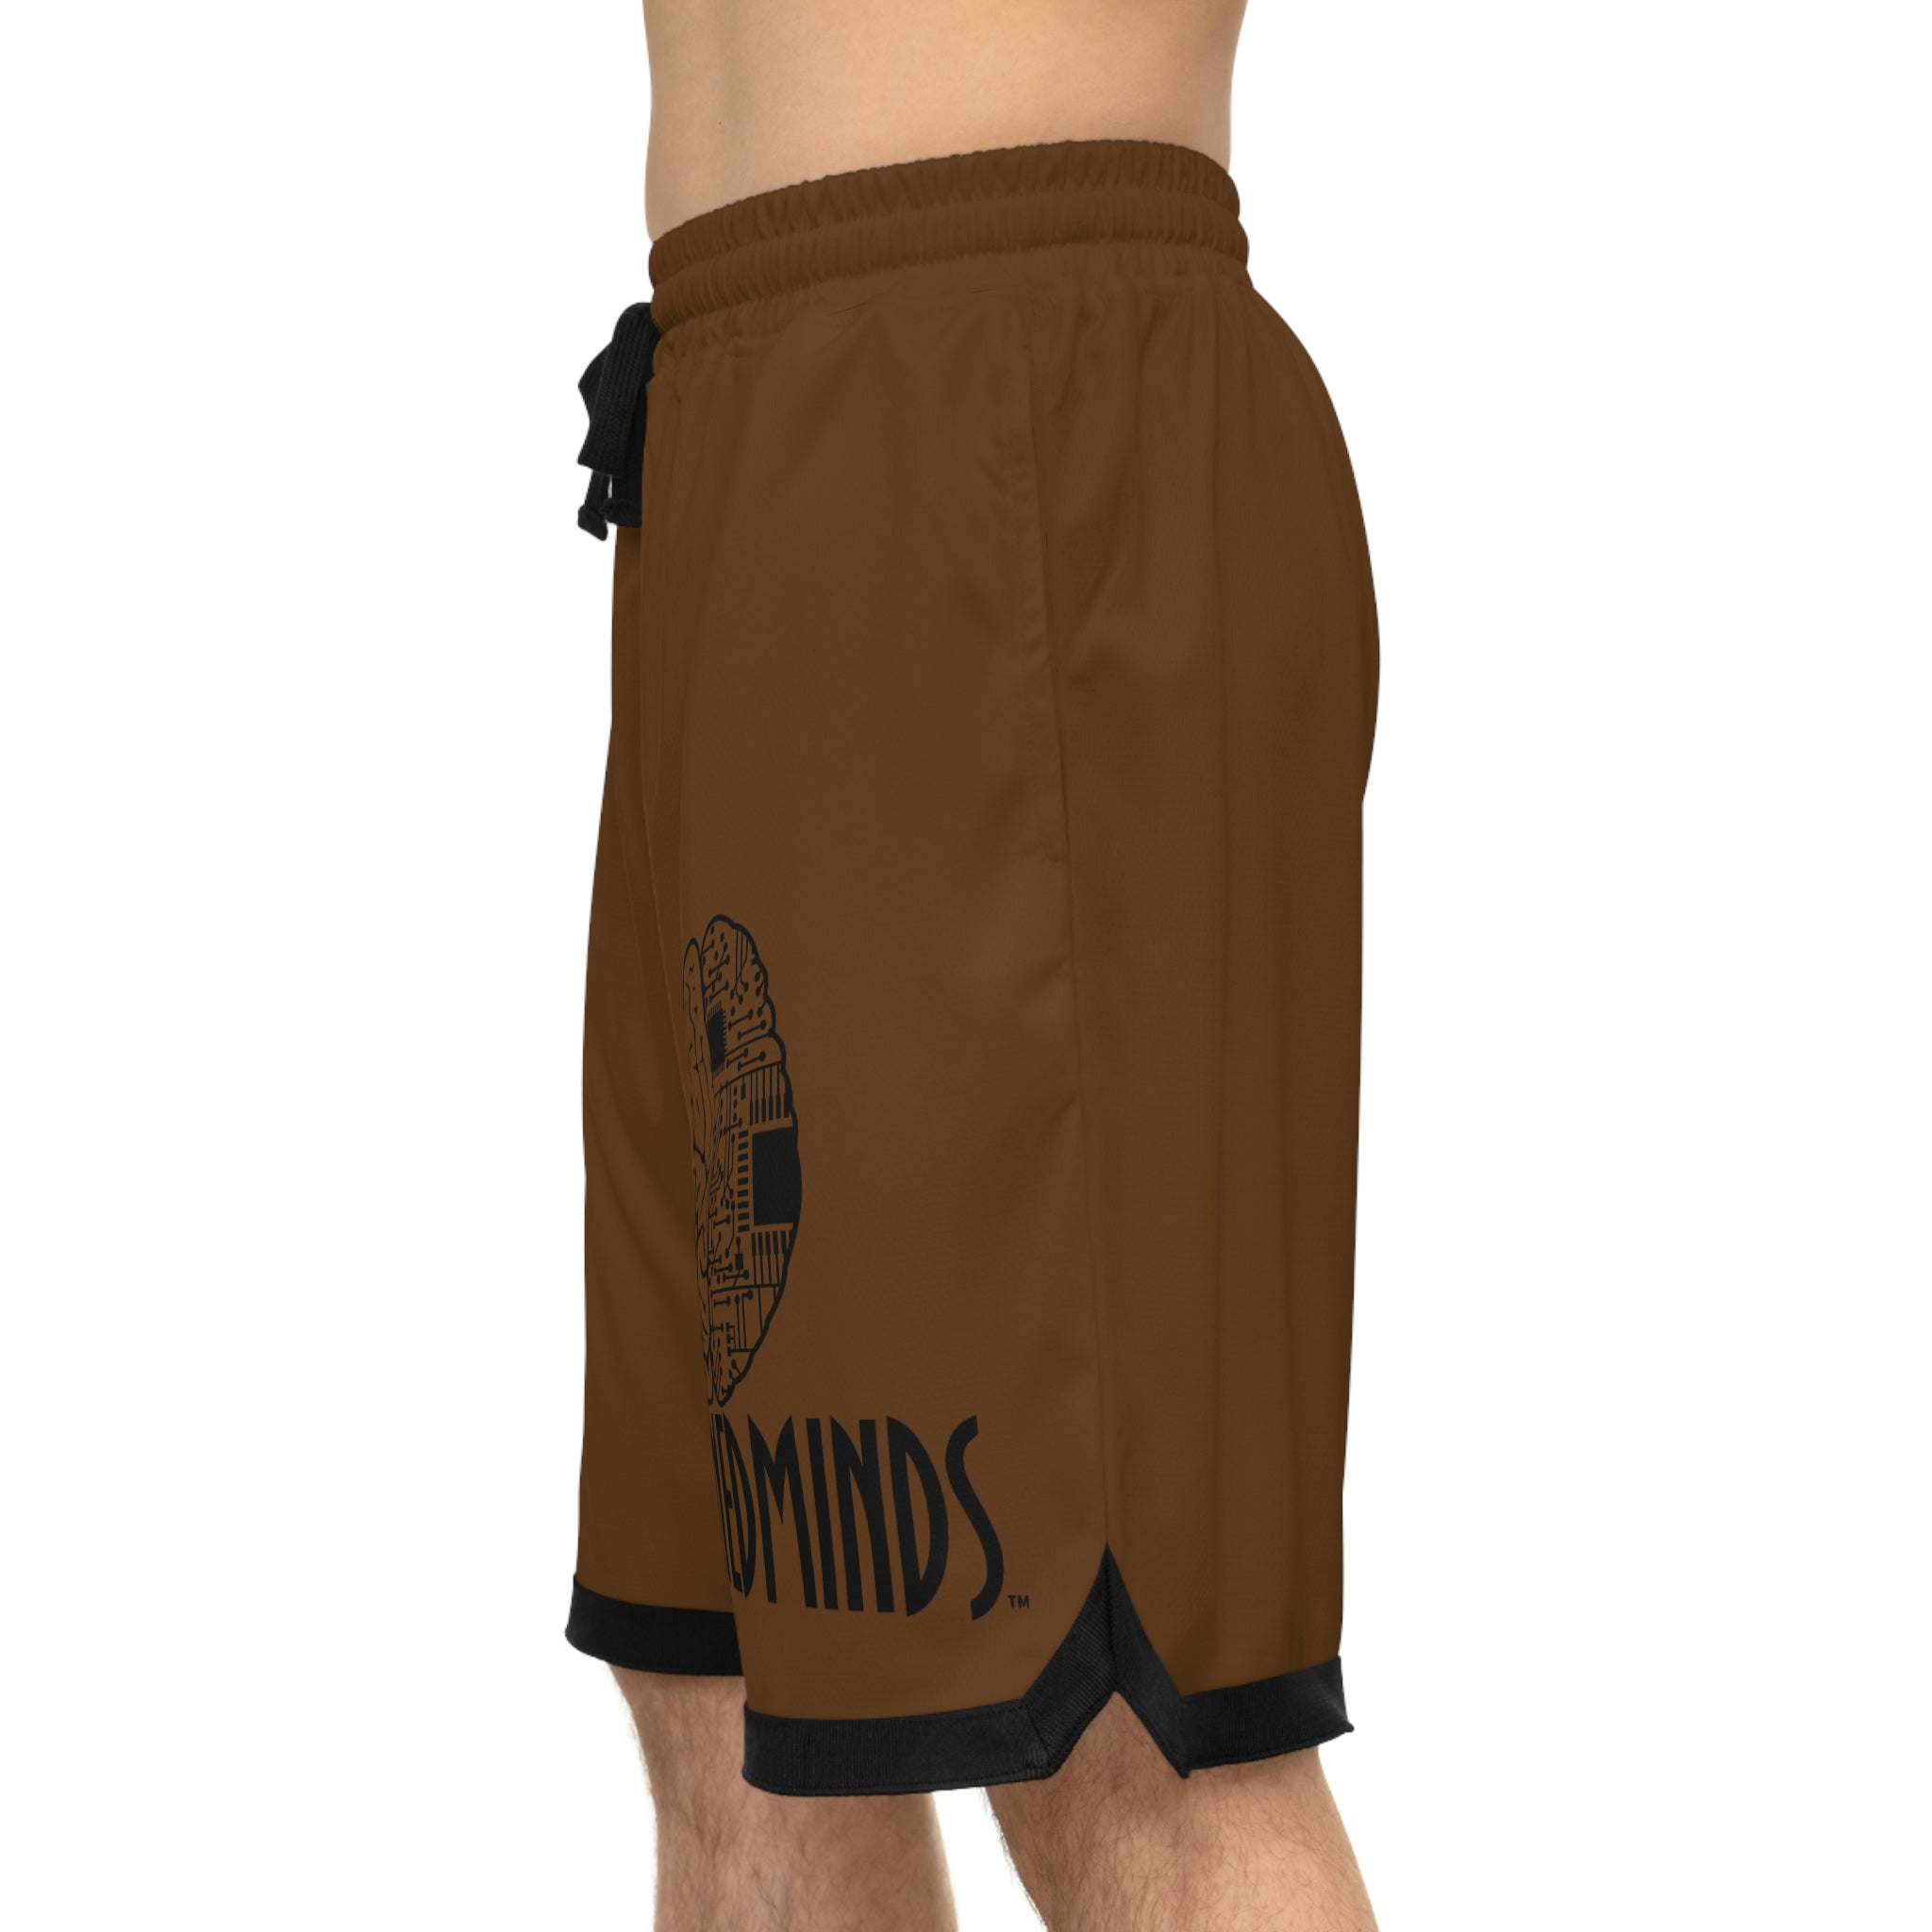 Combinedminds Basketball Shorts Brown/Black Logo